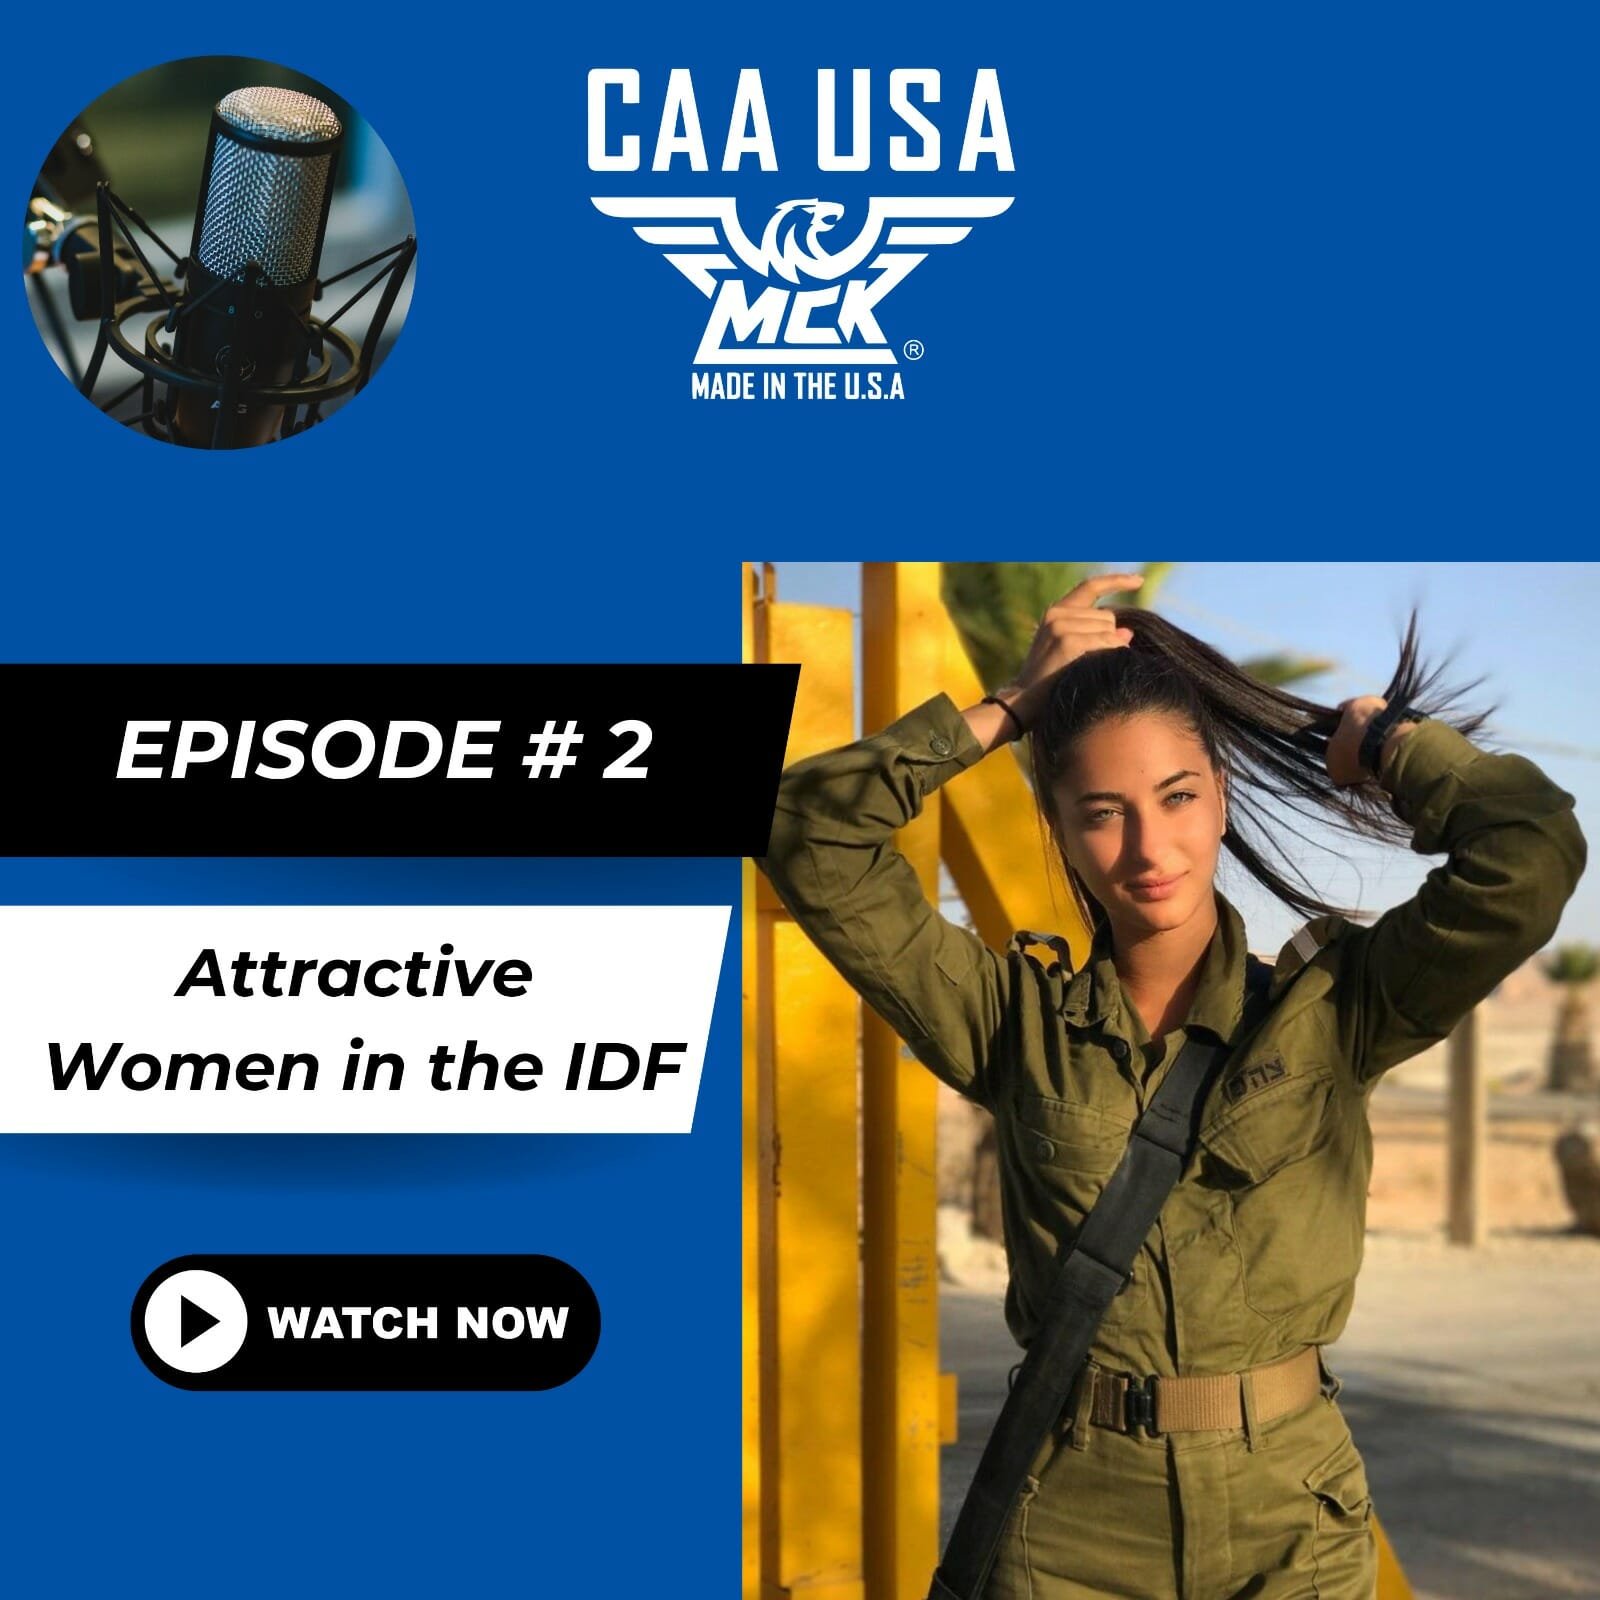 Attractive Women in the IDF